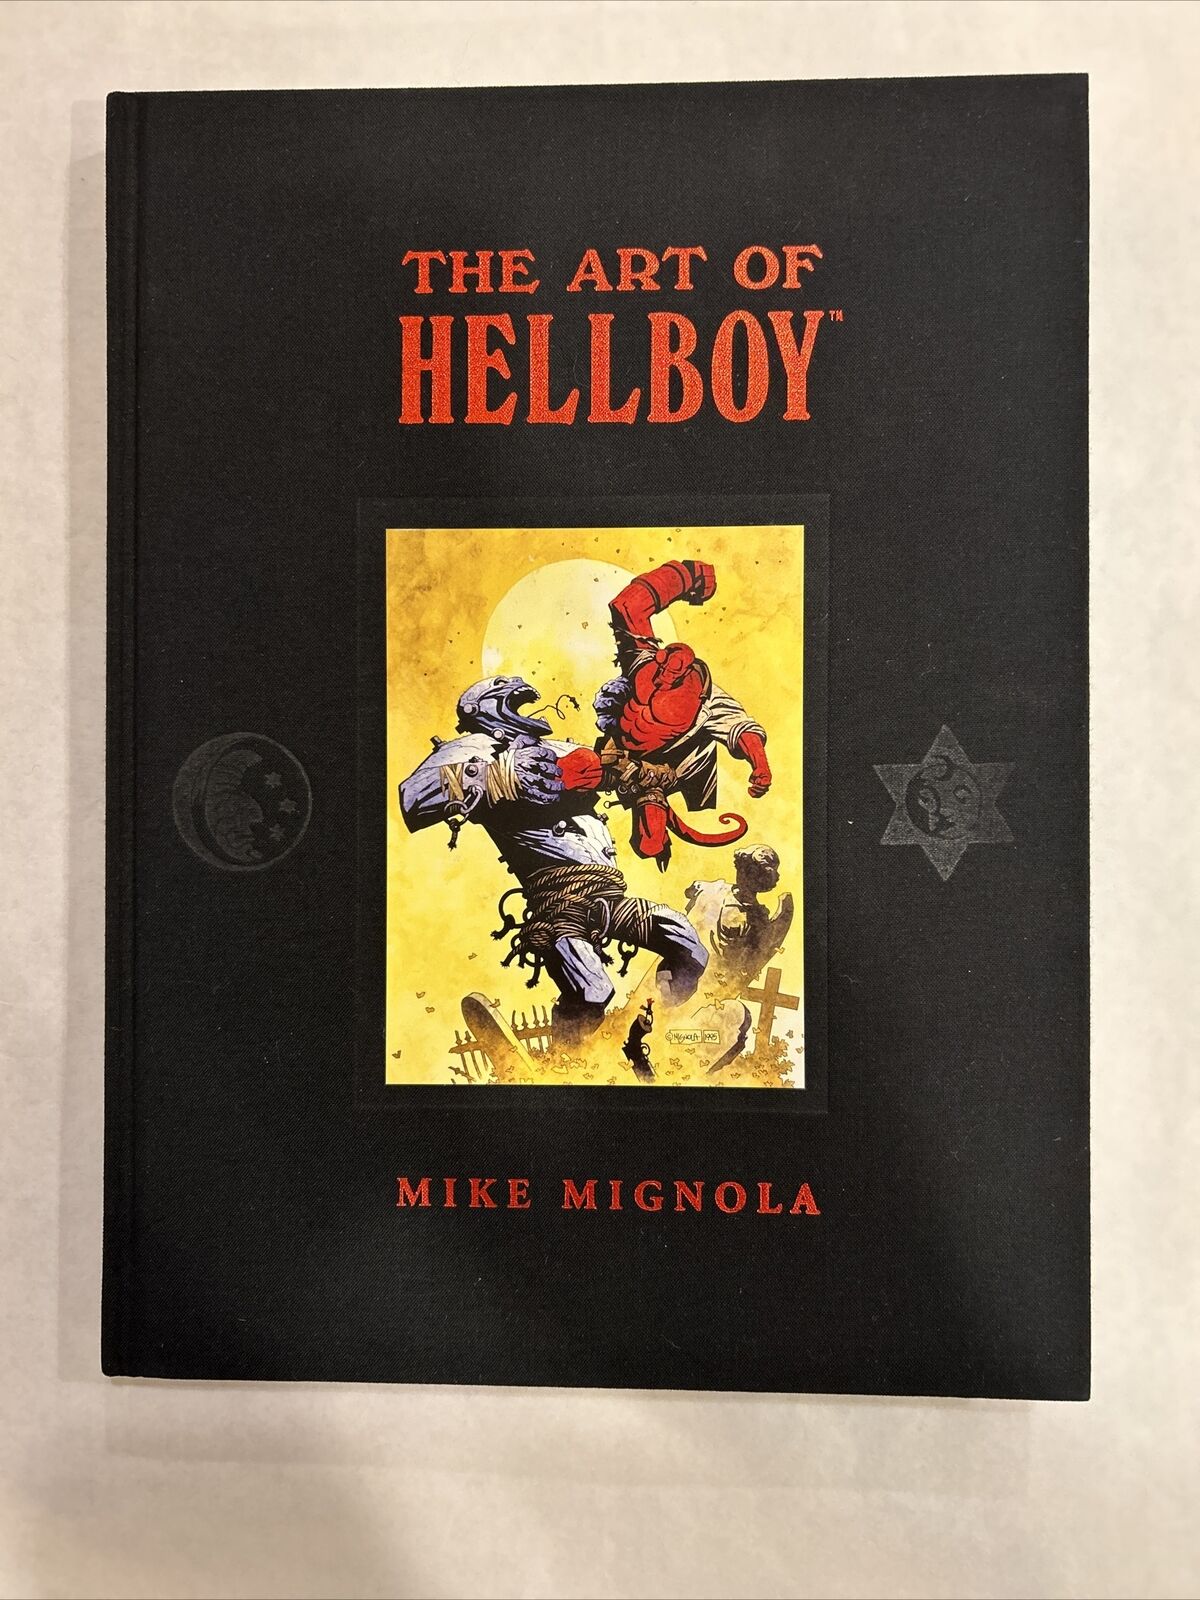 The Art of HellBoy Dark Horse Comics Hardcover by Mike Mignola 2003, OOP